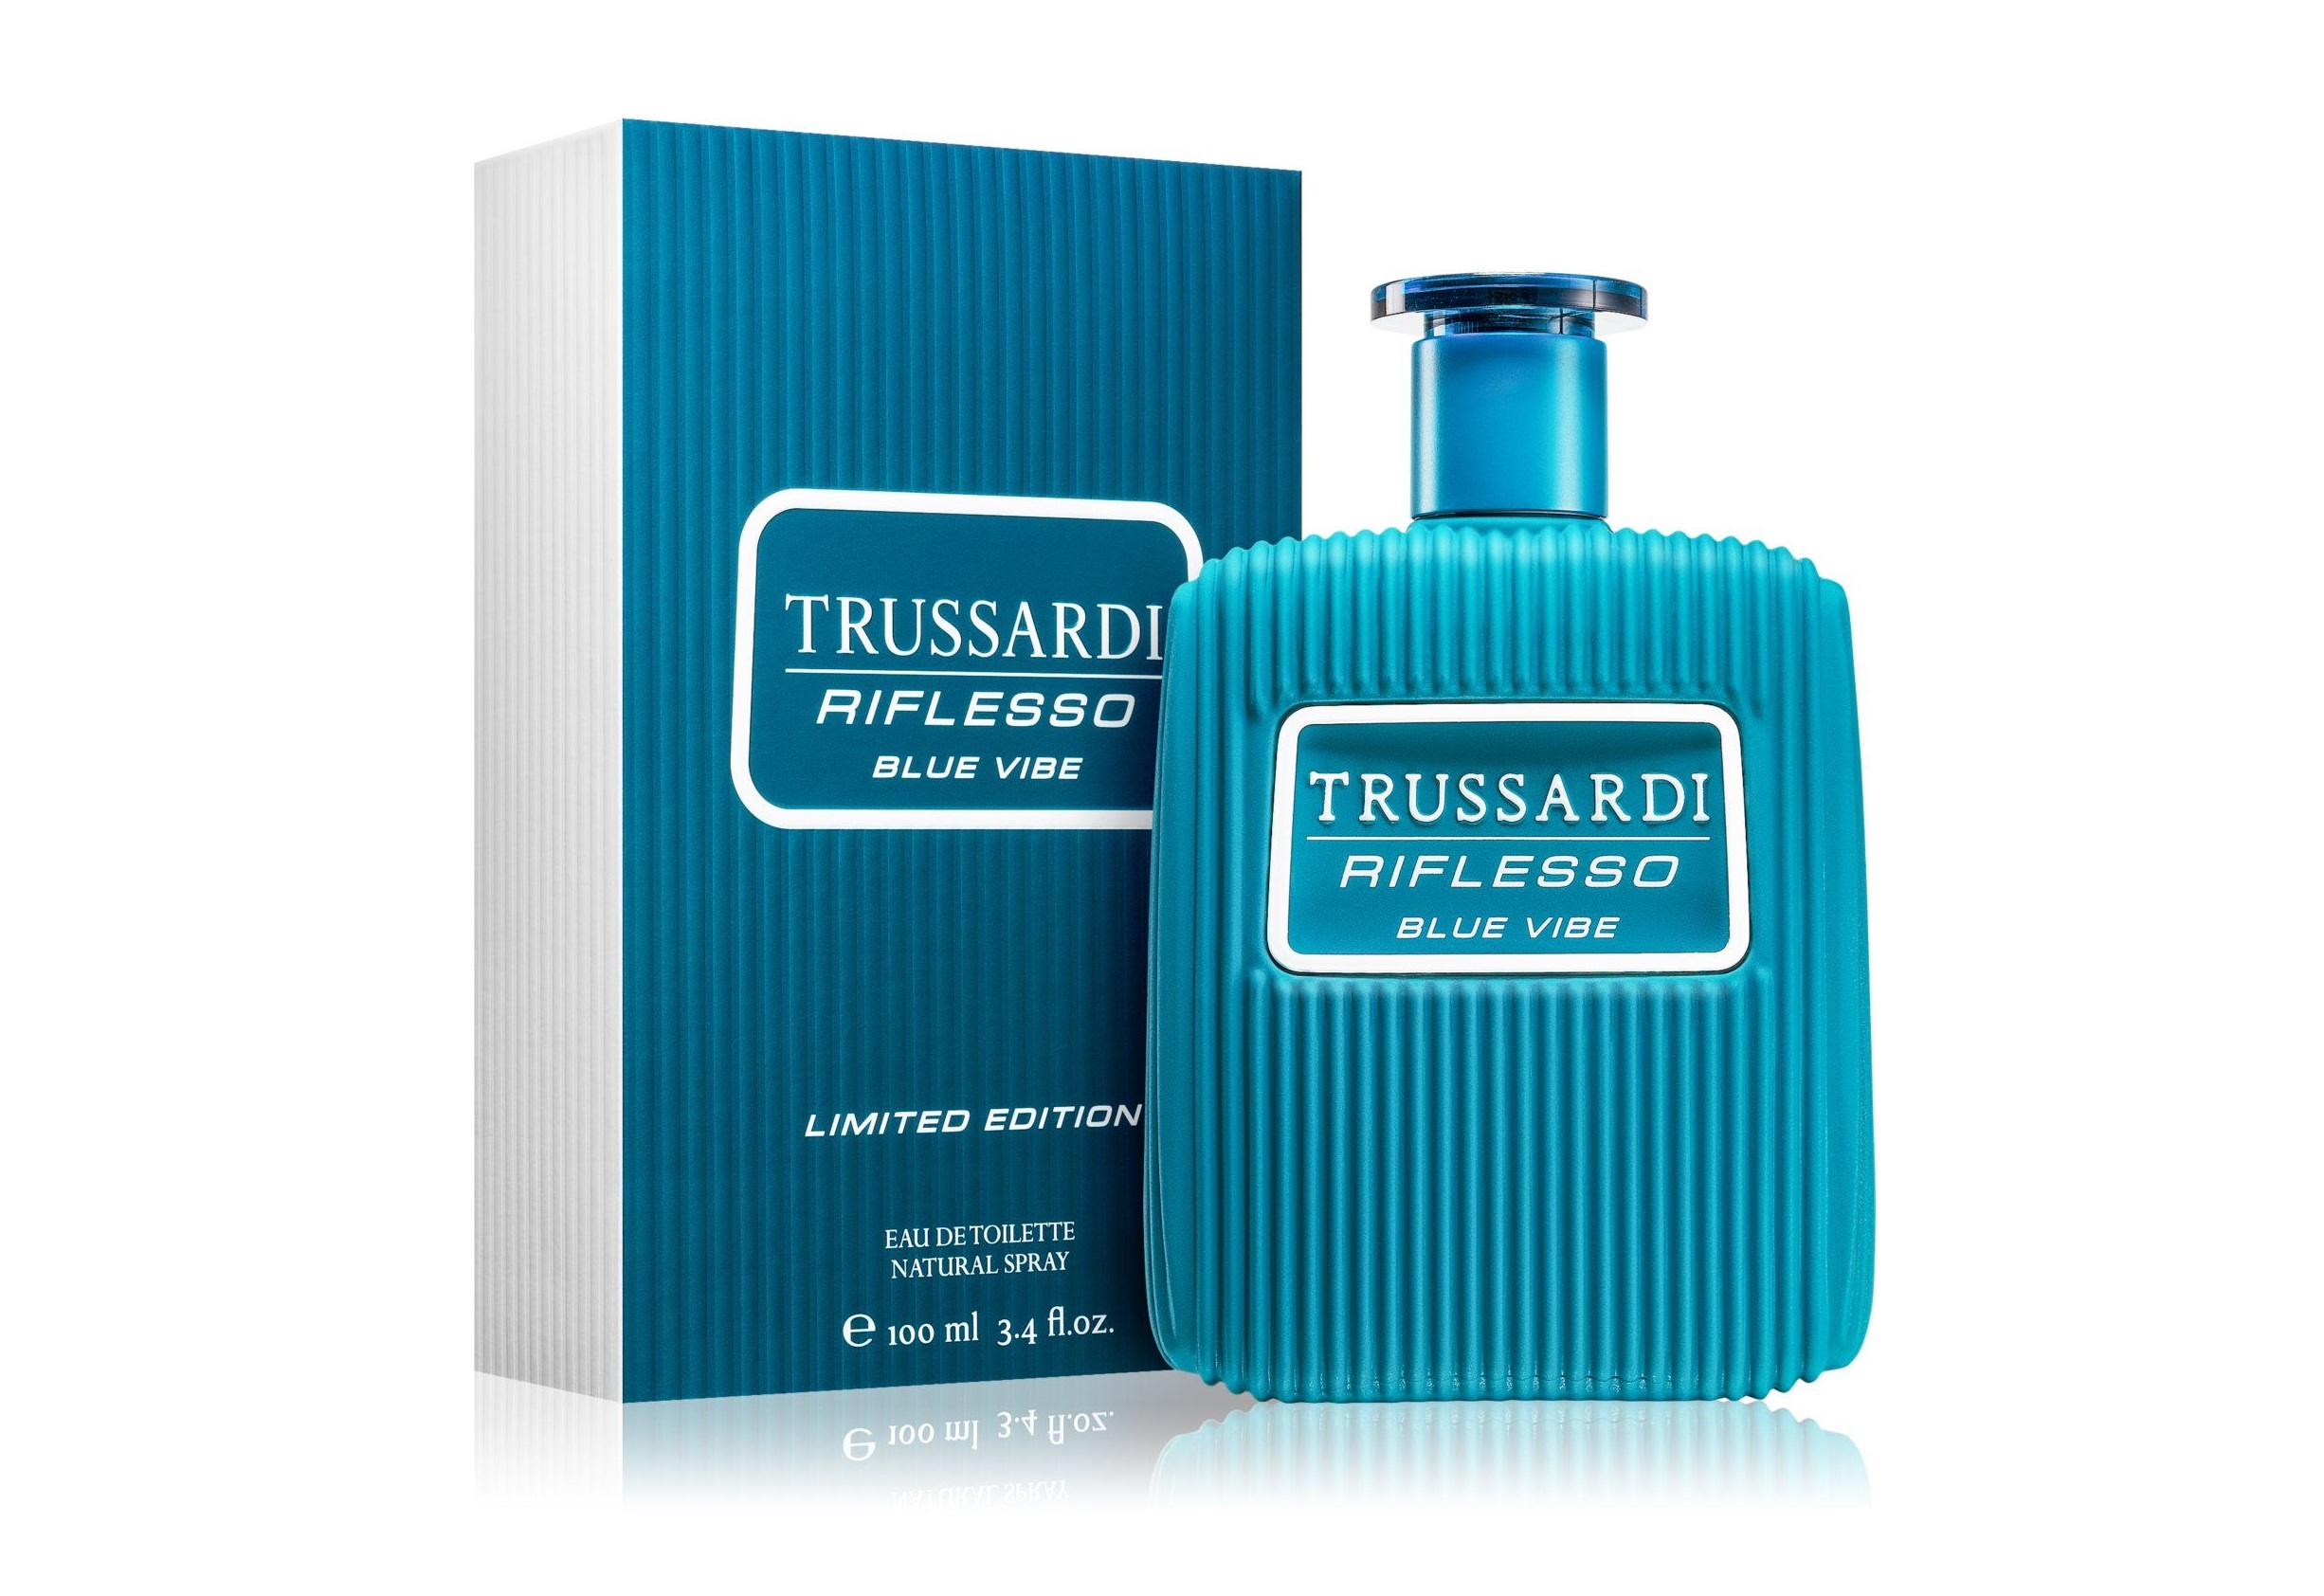 Trussardi Riflesso Blue Vibe Limited Edition 100 mL